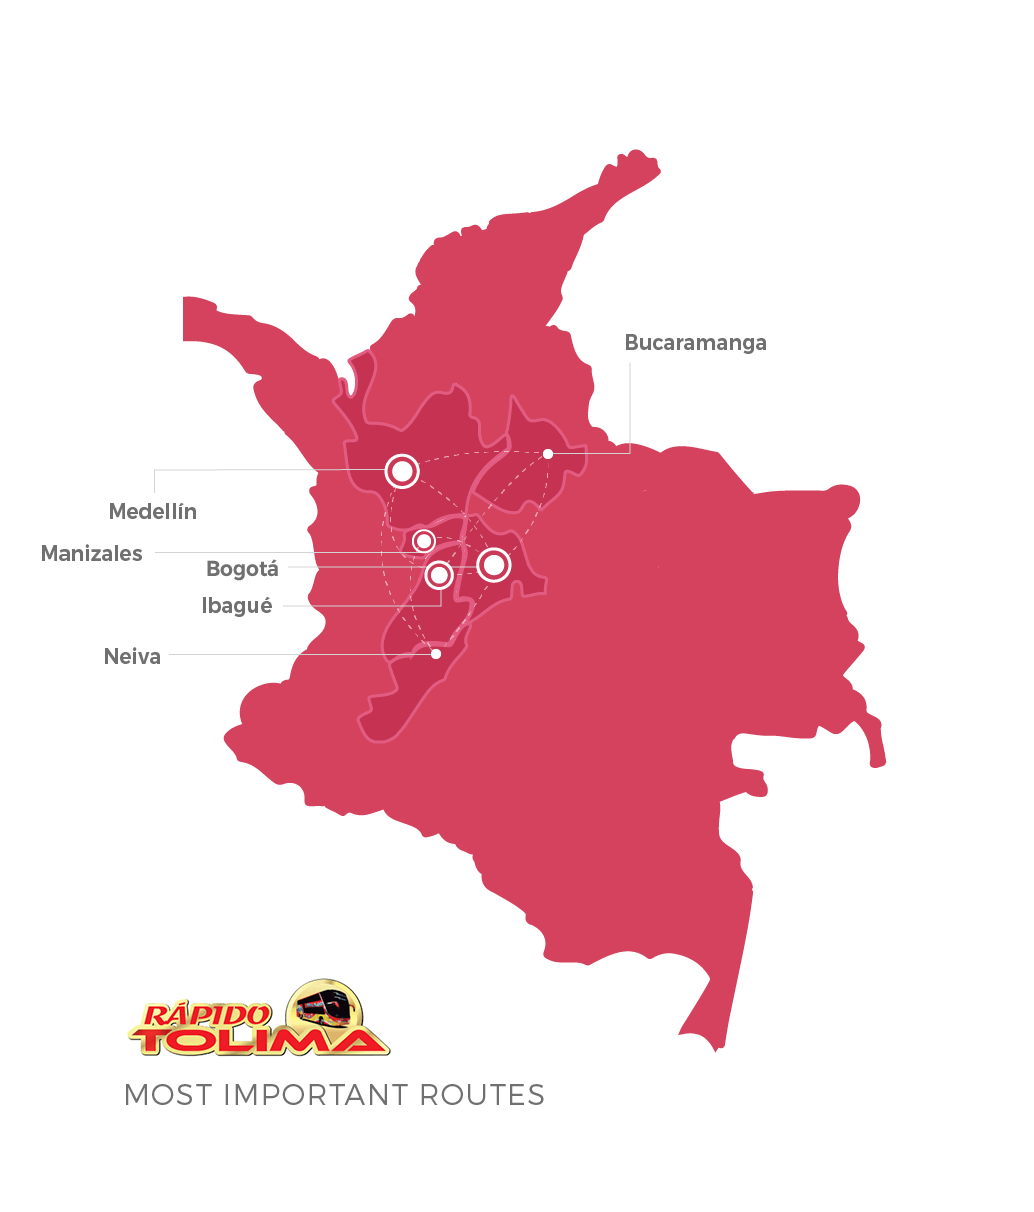 Rapido Tolima destinations